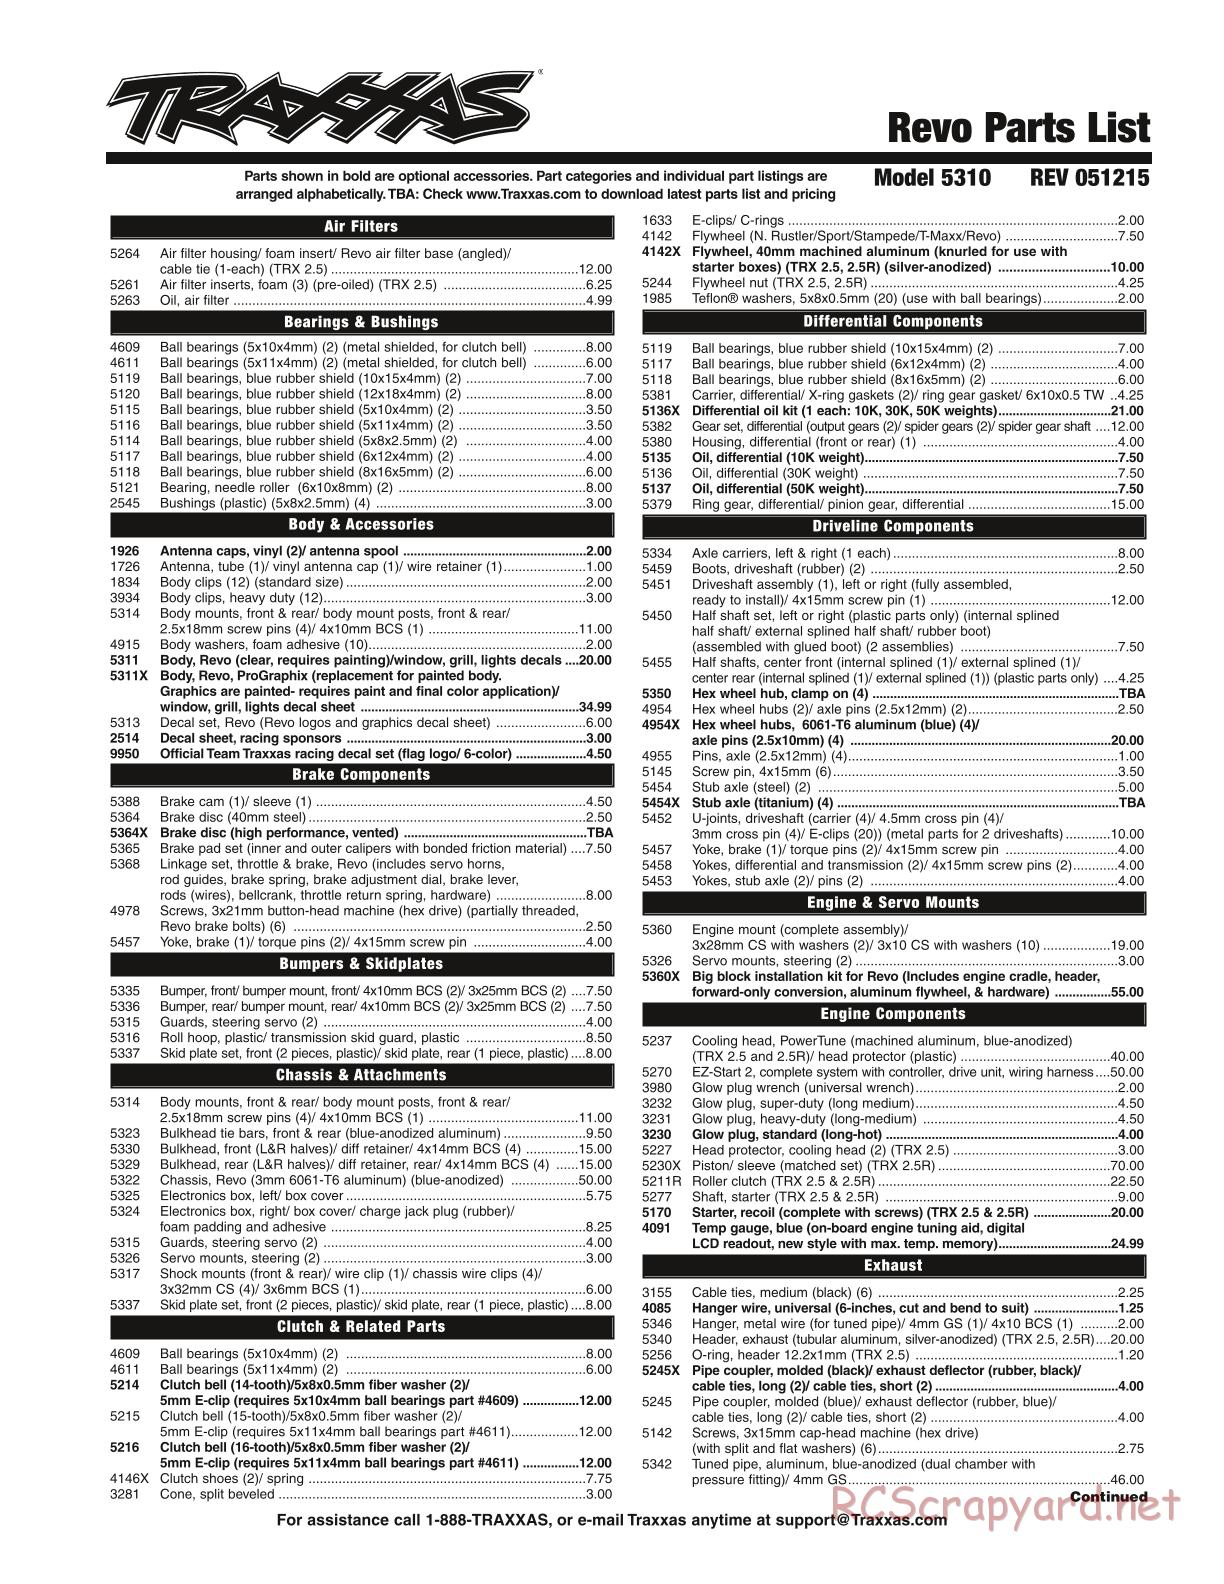 Traxxas - Revo 2.5R (2004) - Parts List - Page 1